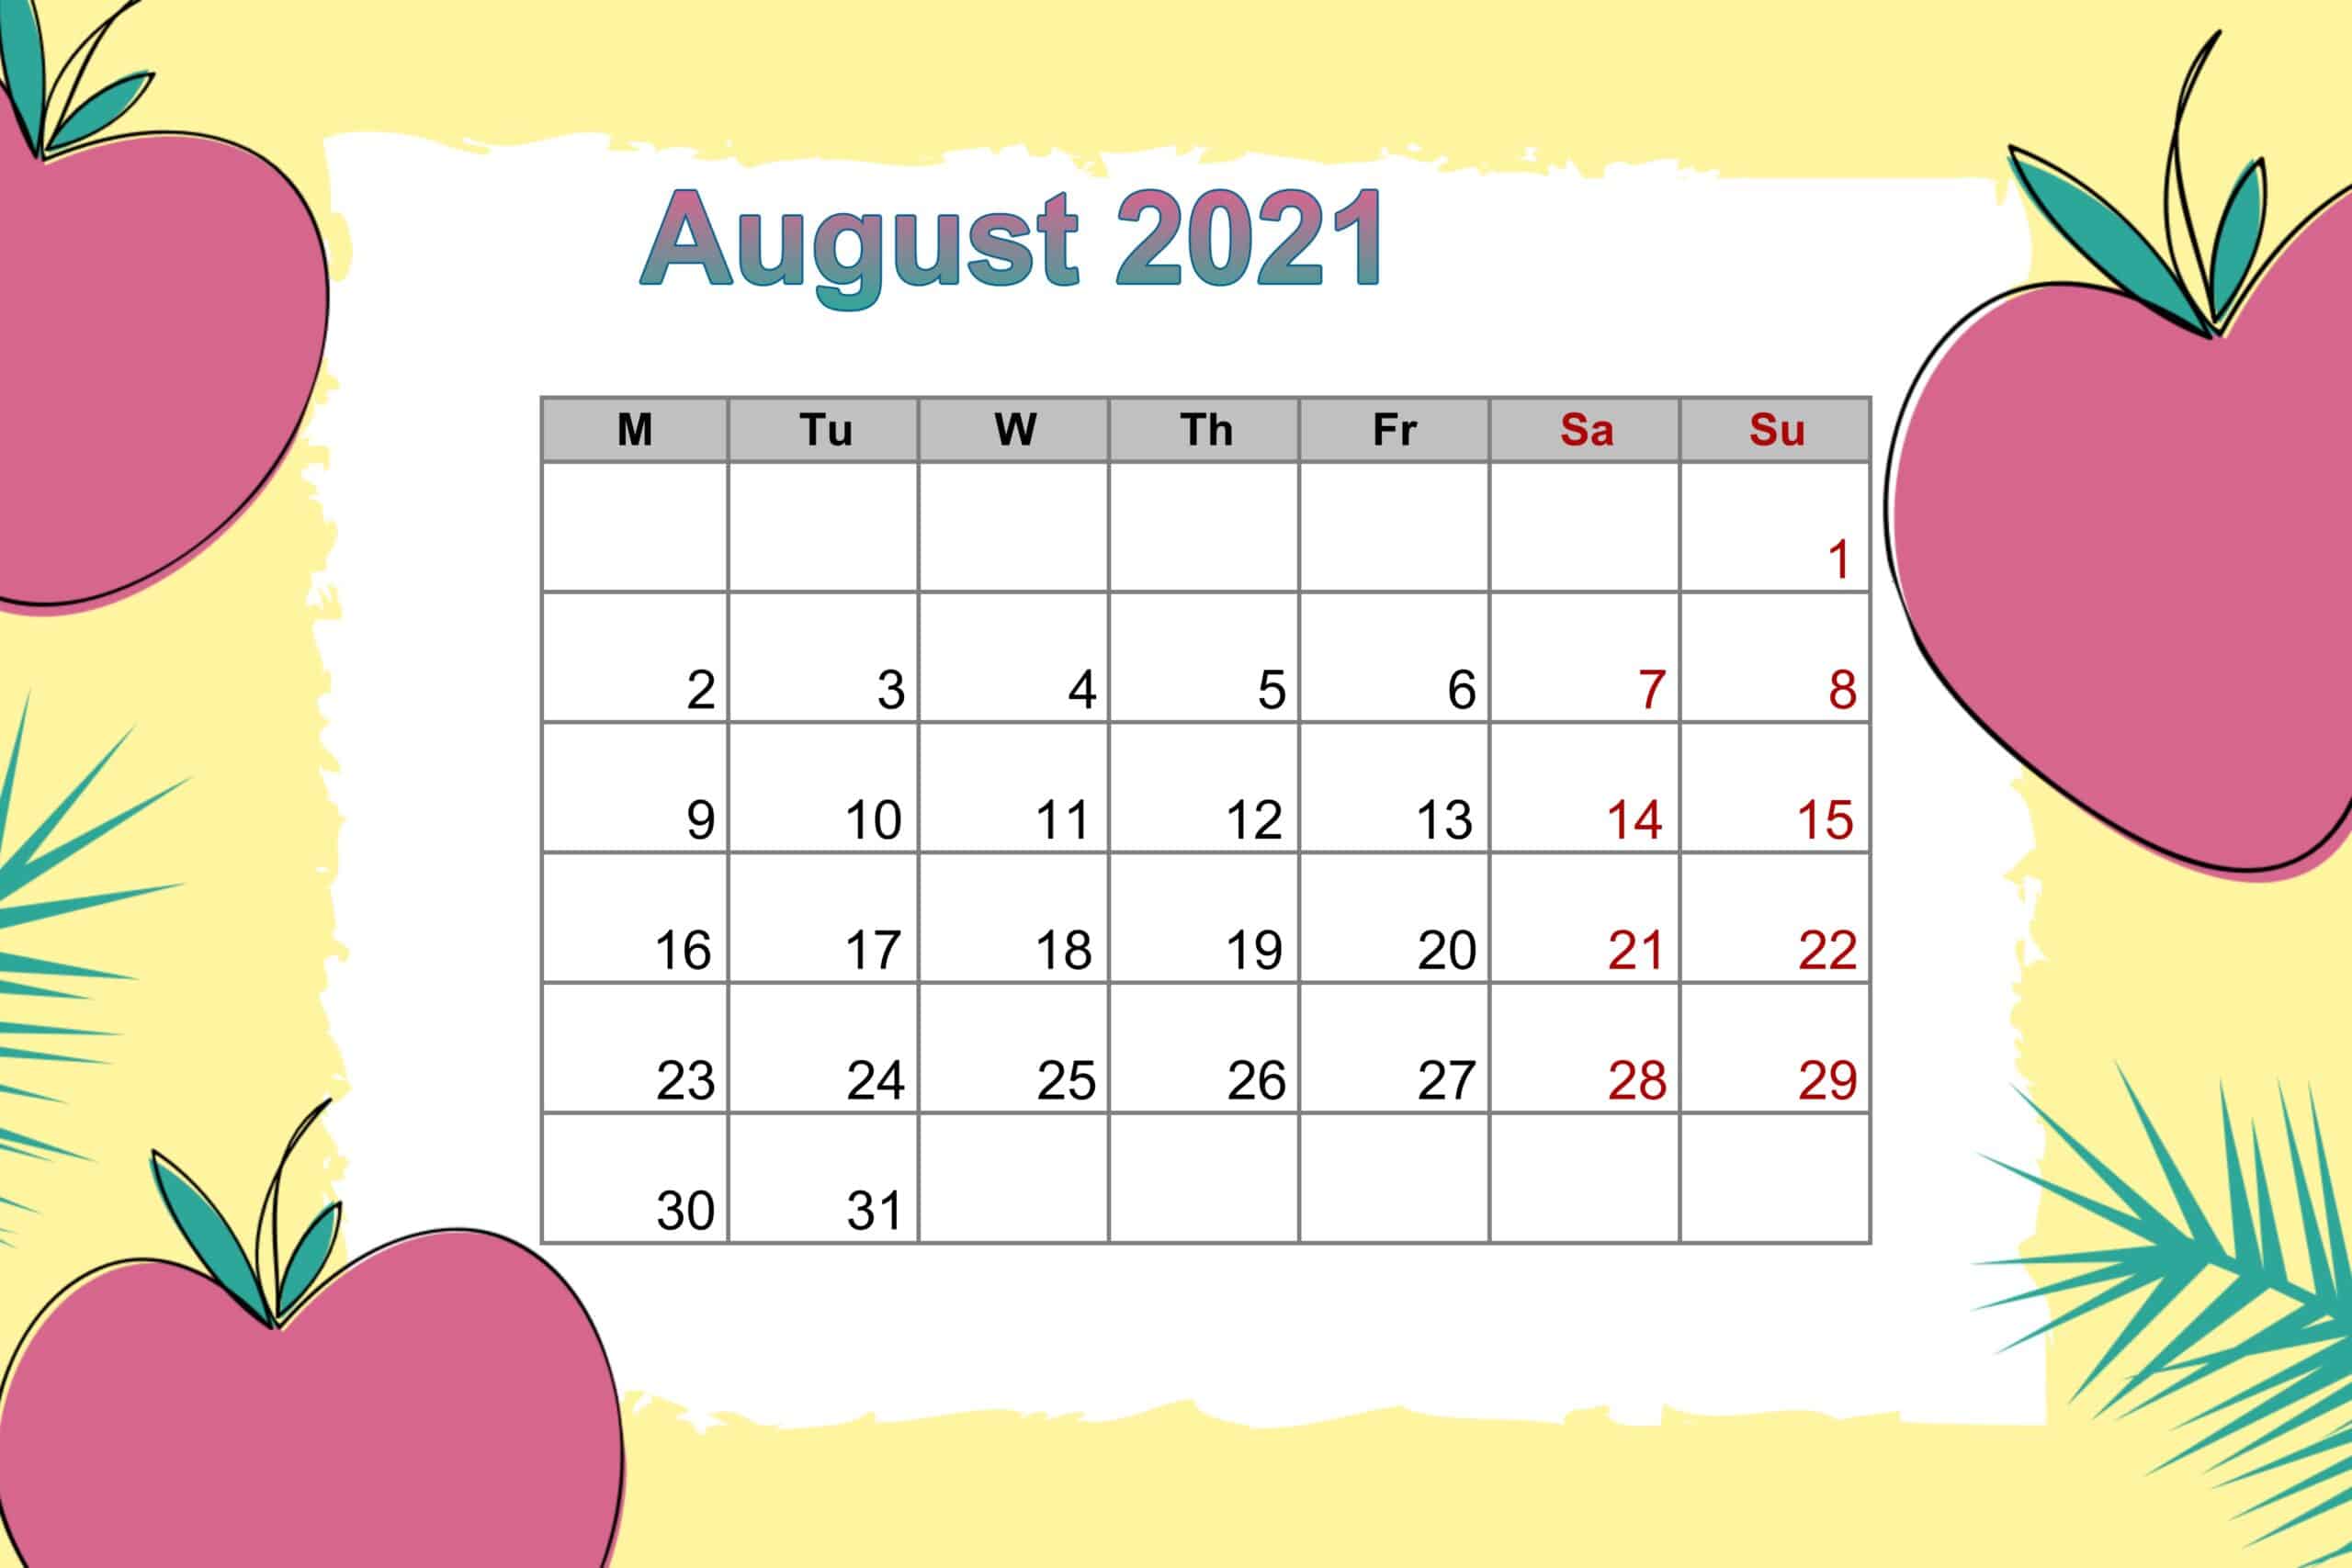 August 2021 Floral Calendar